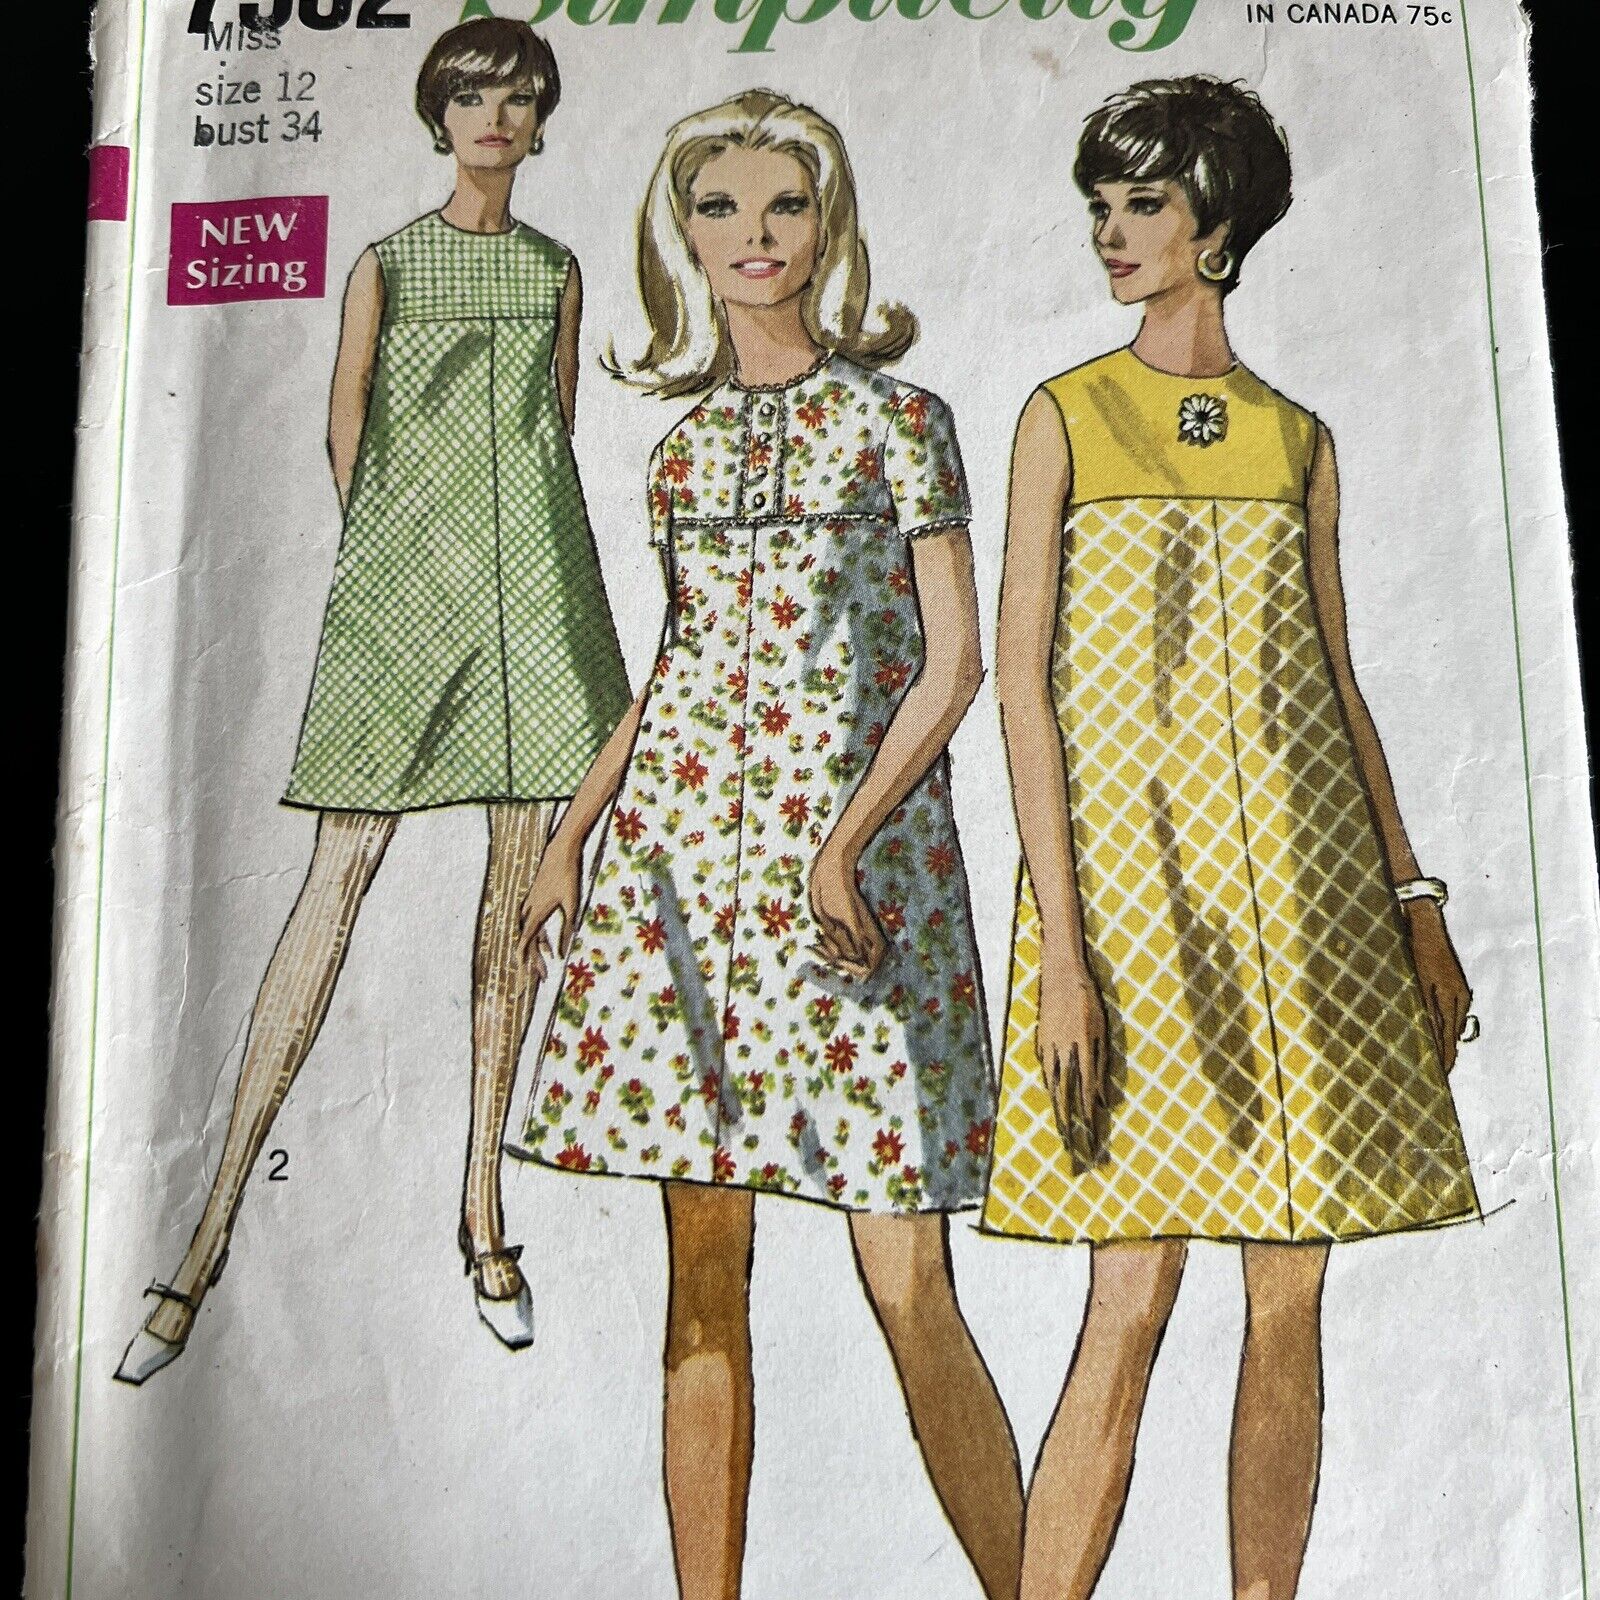 Vintage 1960s Simplicity 7532 Mod Yoked A-Line Dress Sewing Pattern 12 XS CUT